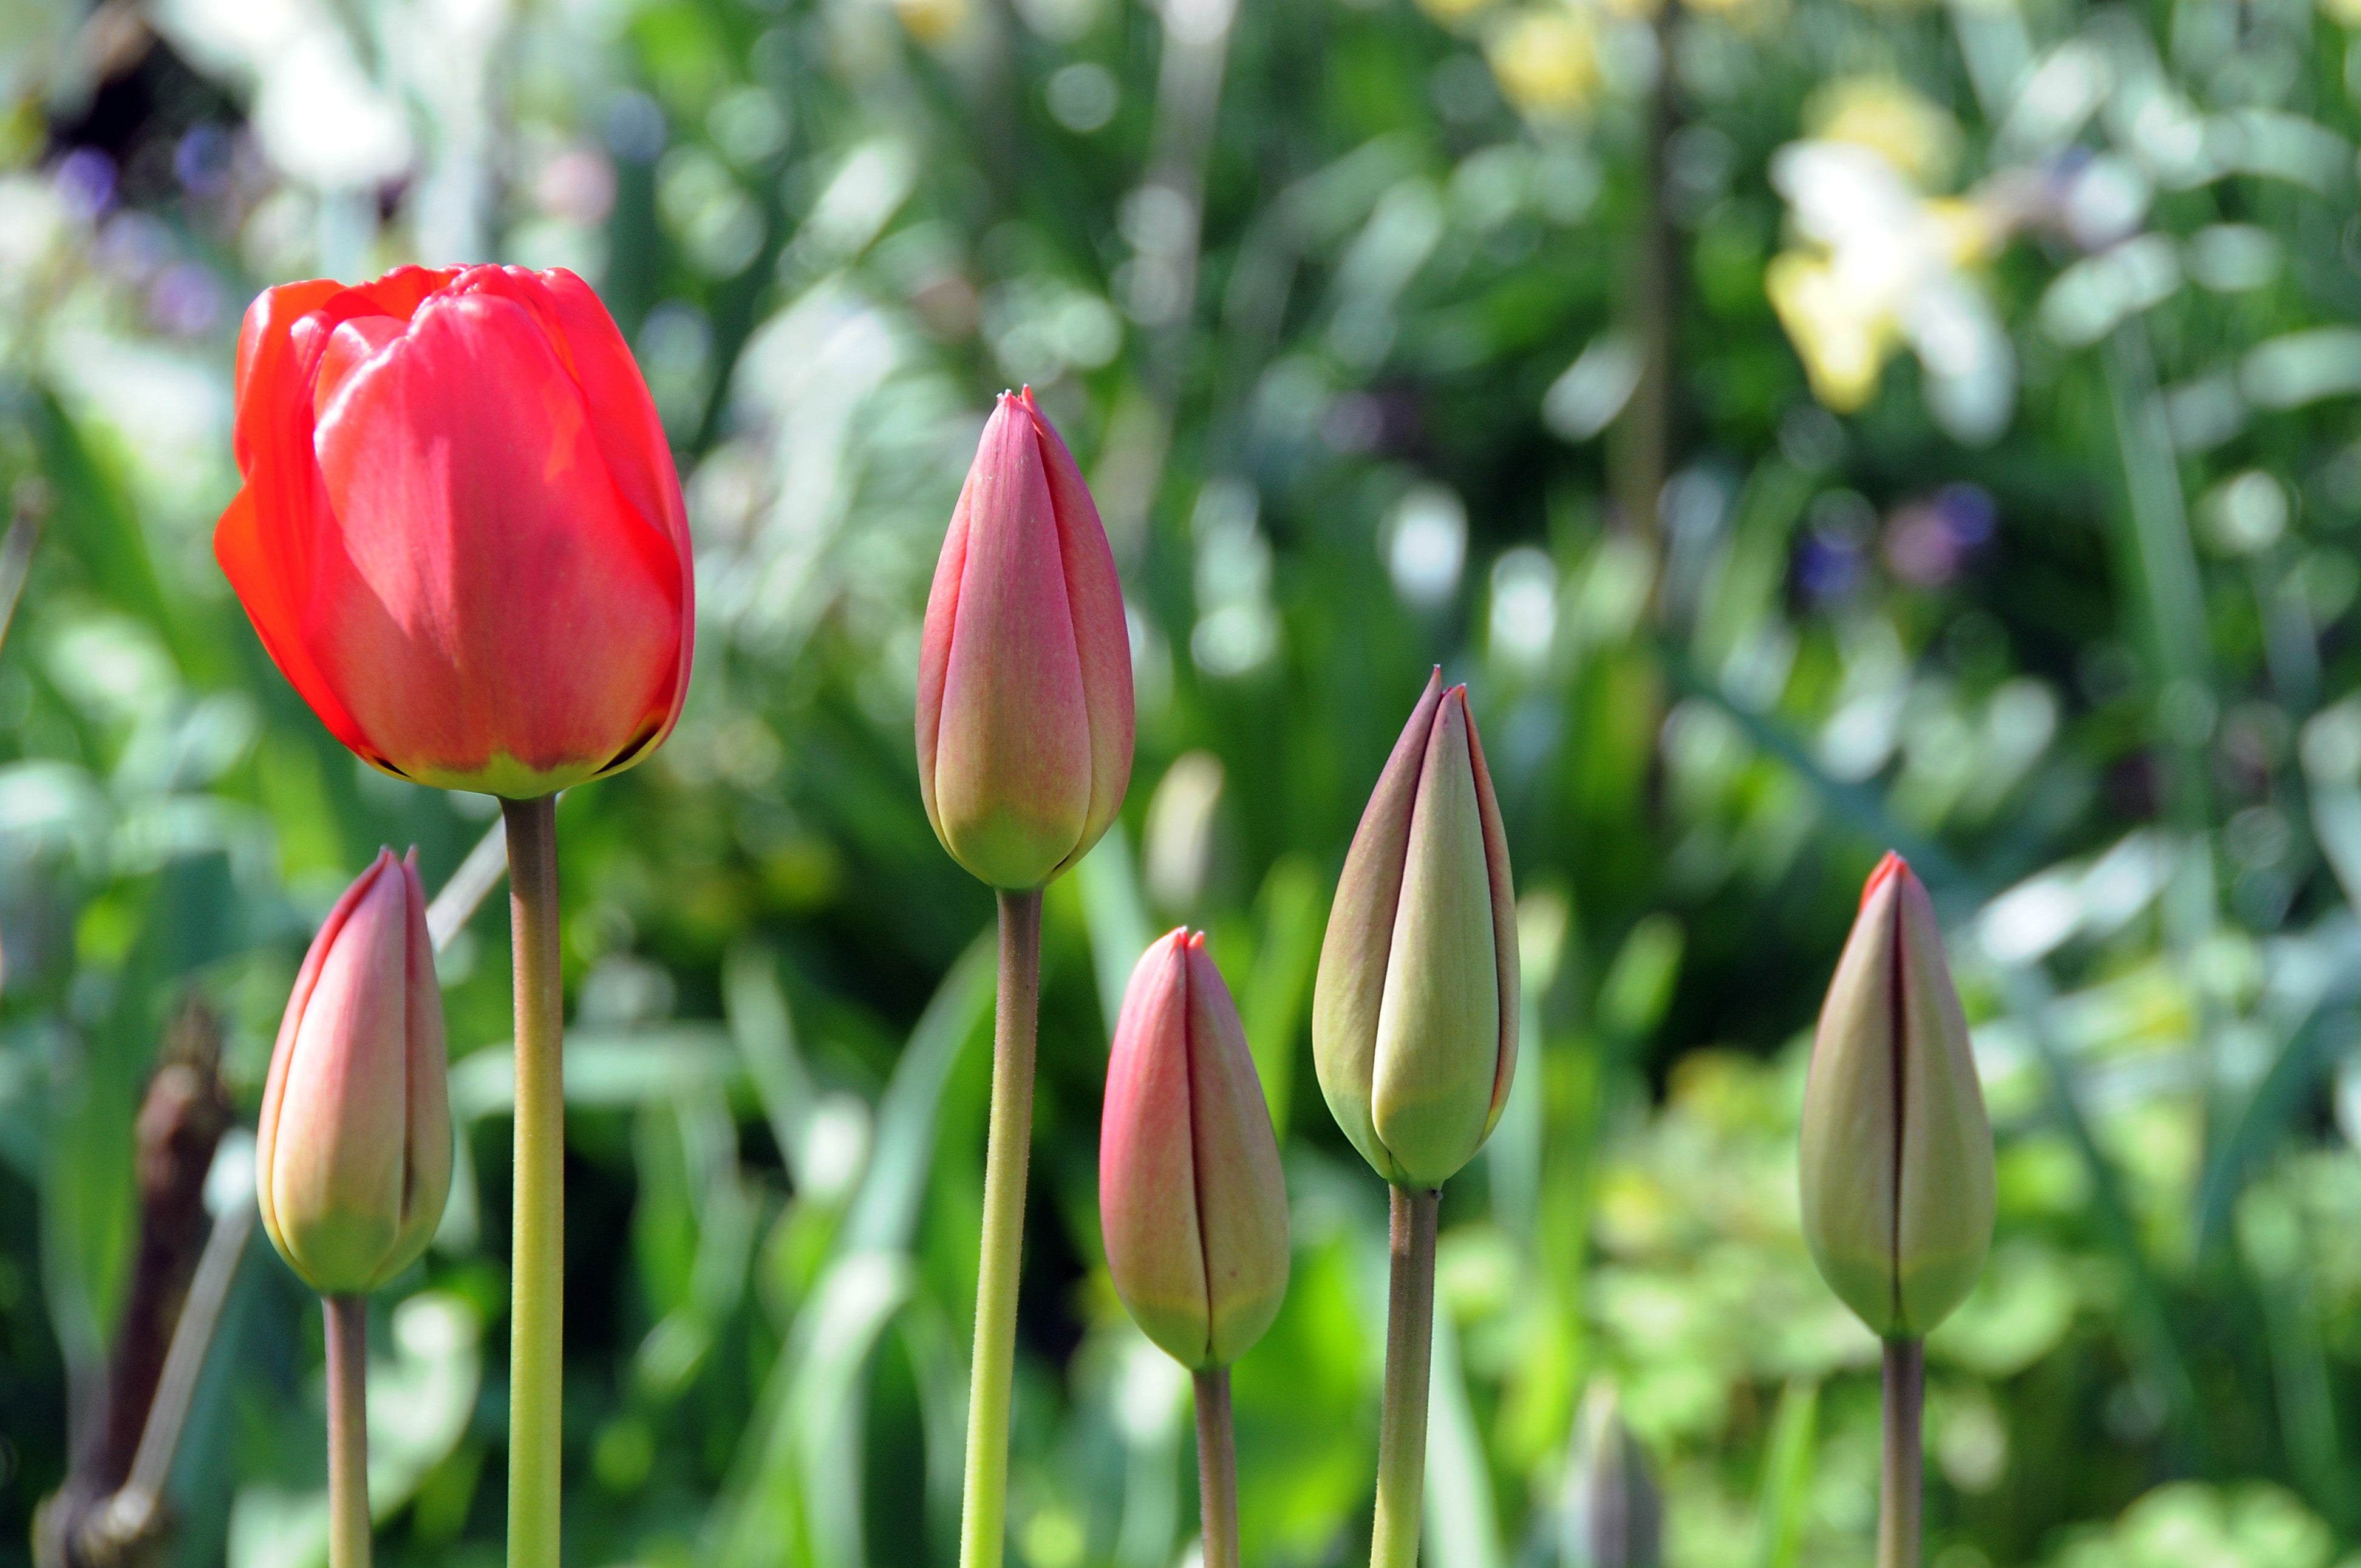 Stunning red flower, a Darwin Hybrid Apeldoorn tulip, displaying its beauty.